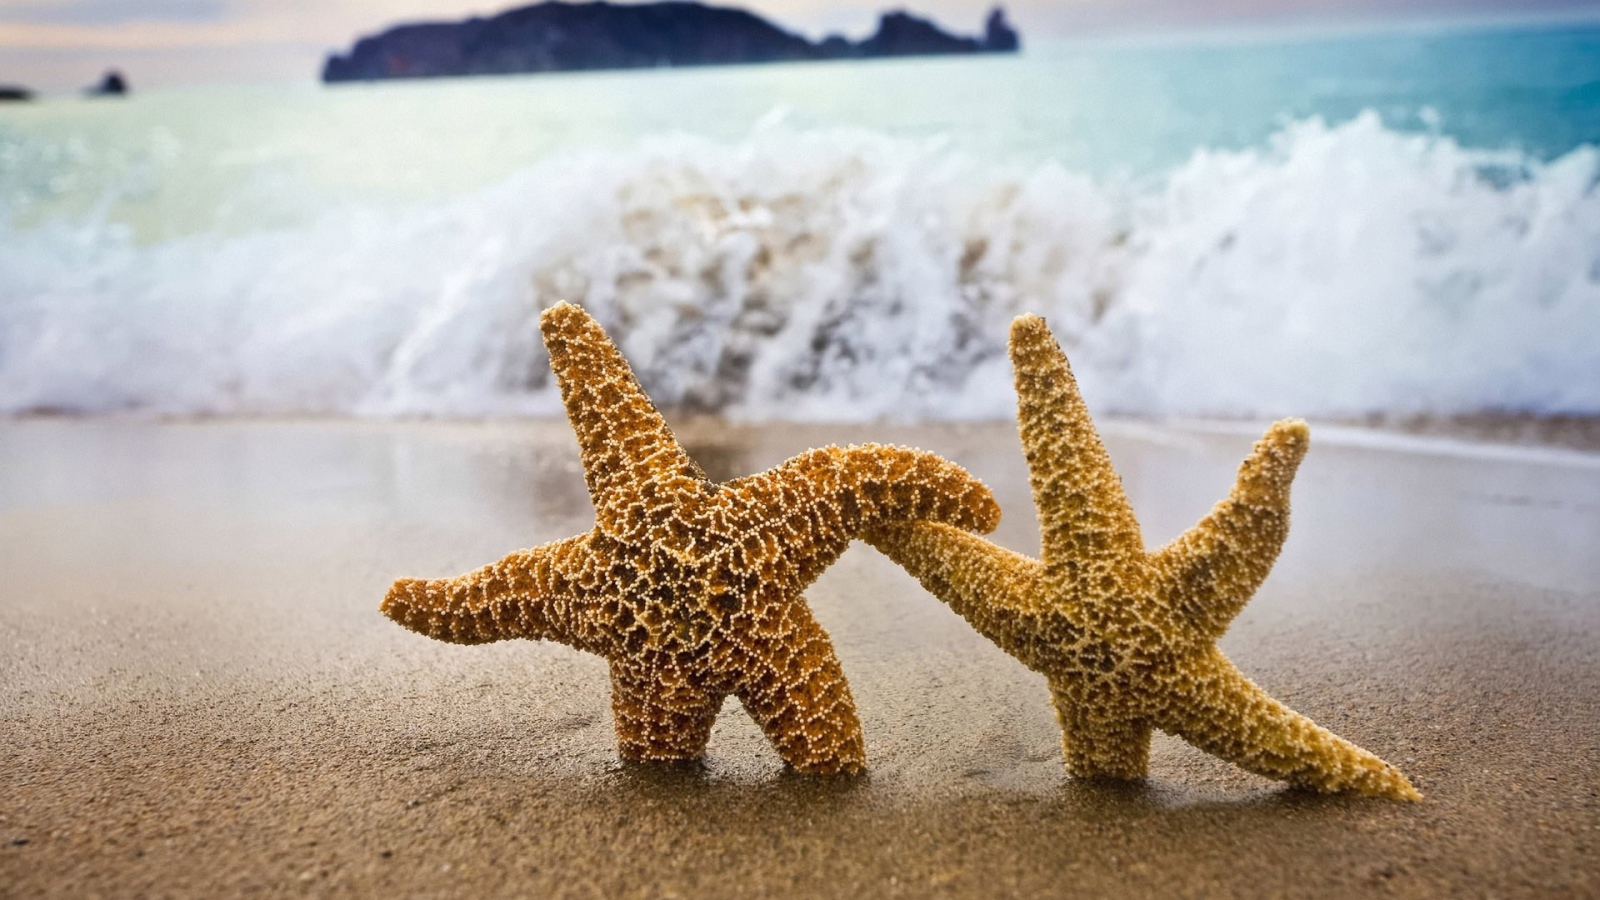 Две морские звезды в песке пляжа